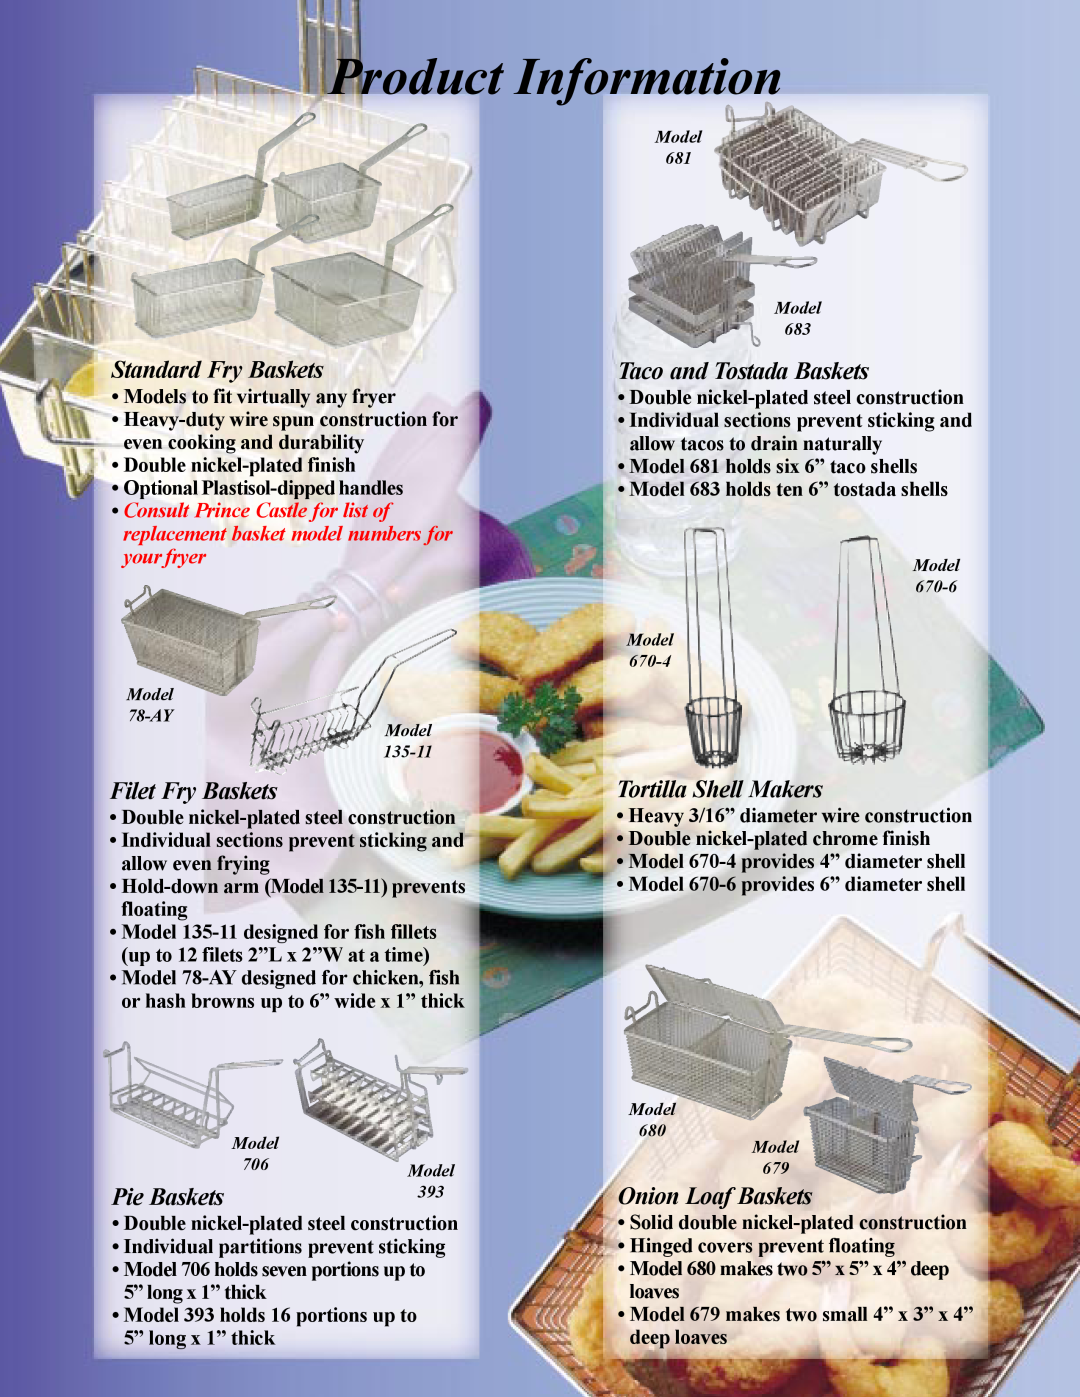 Prince Castle 670-4 Product Information, Standard Fry Baskets, Filet Fry Baskets, Pie Baskets, Taco and Tostada Baskets 